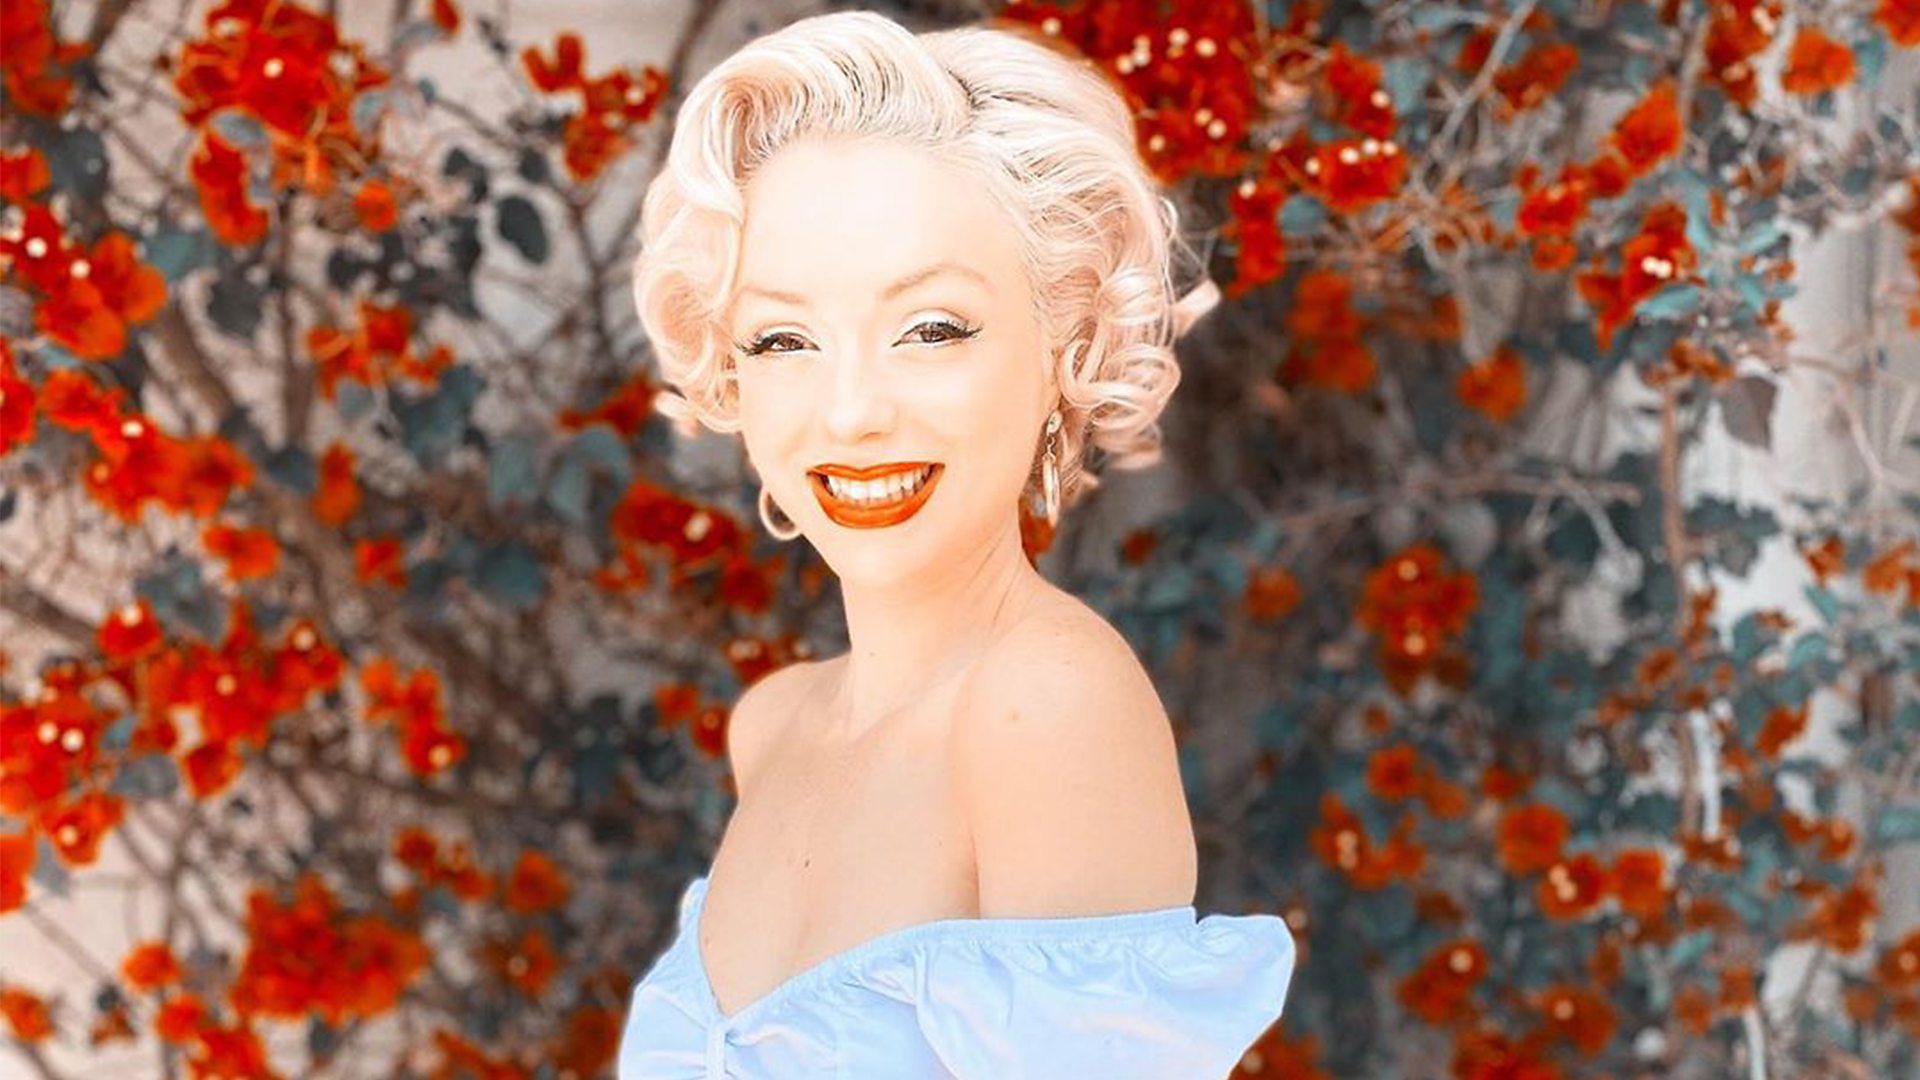 Who Is the Marilyn Monroe of TikTok?